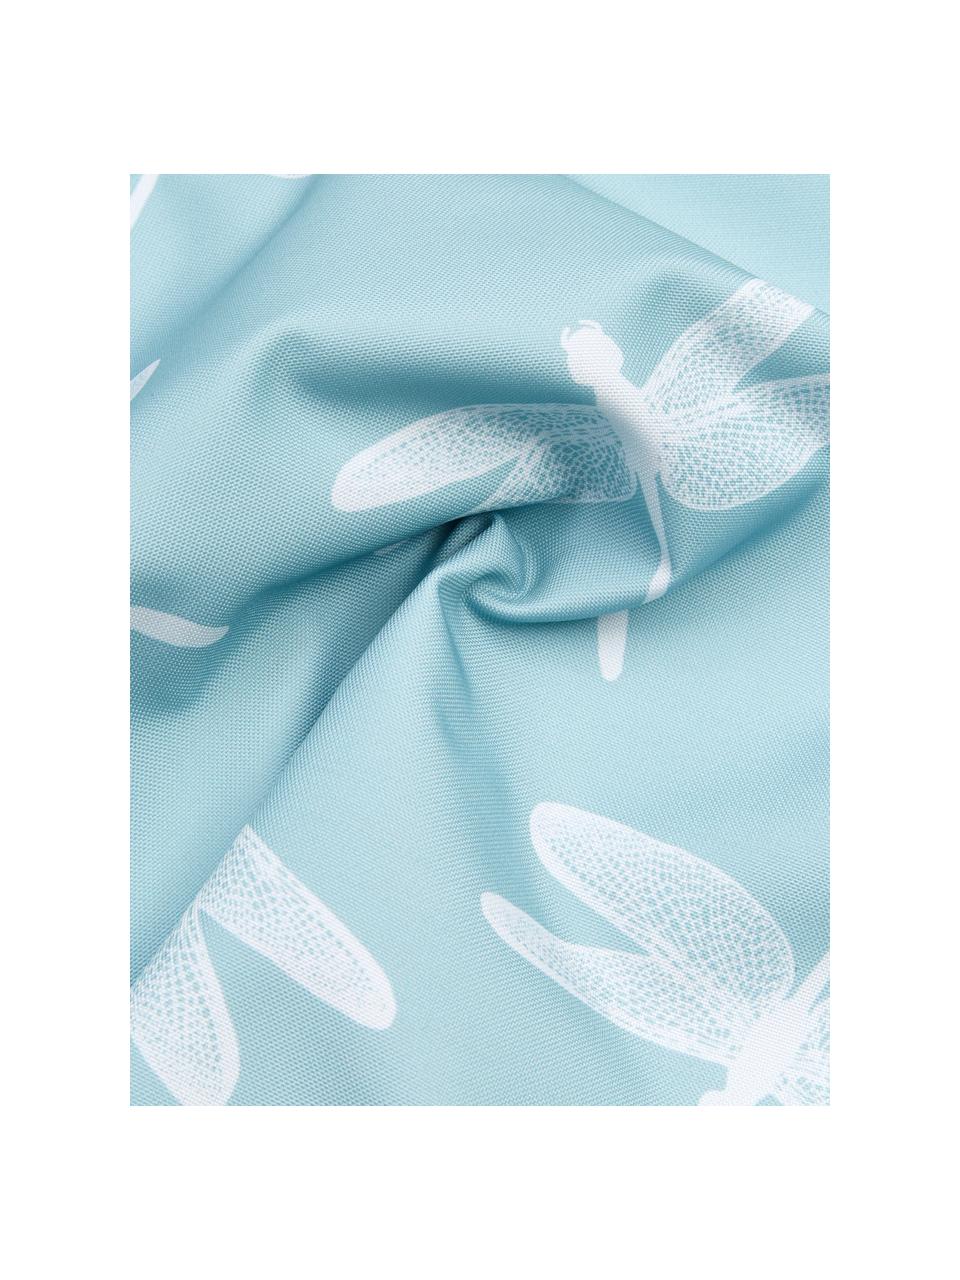 Outdoor-Kissen Dragonfly mit Libellenmotiven, 100% Polyester, Blau, Weiss, B 47 x L 47 cm